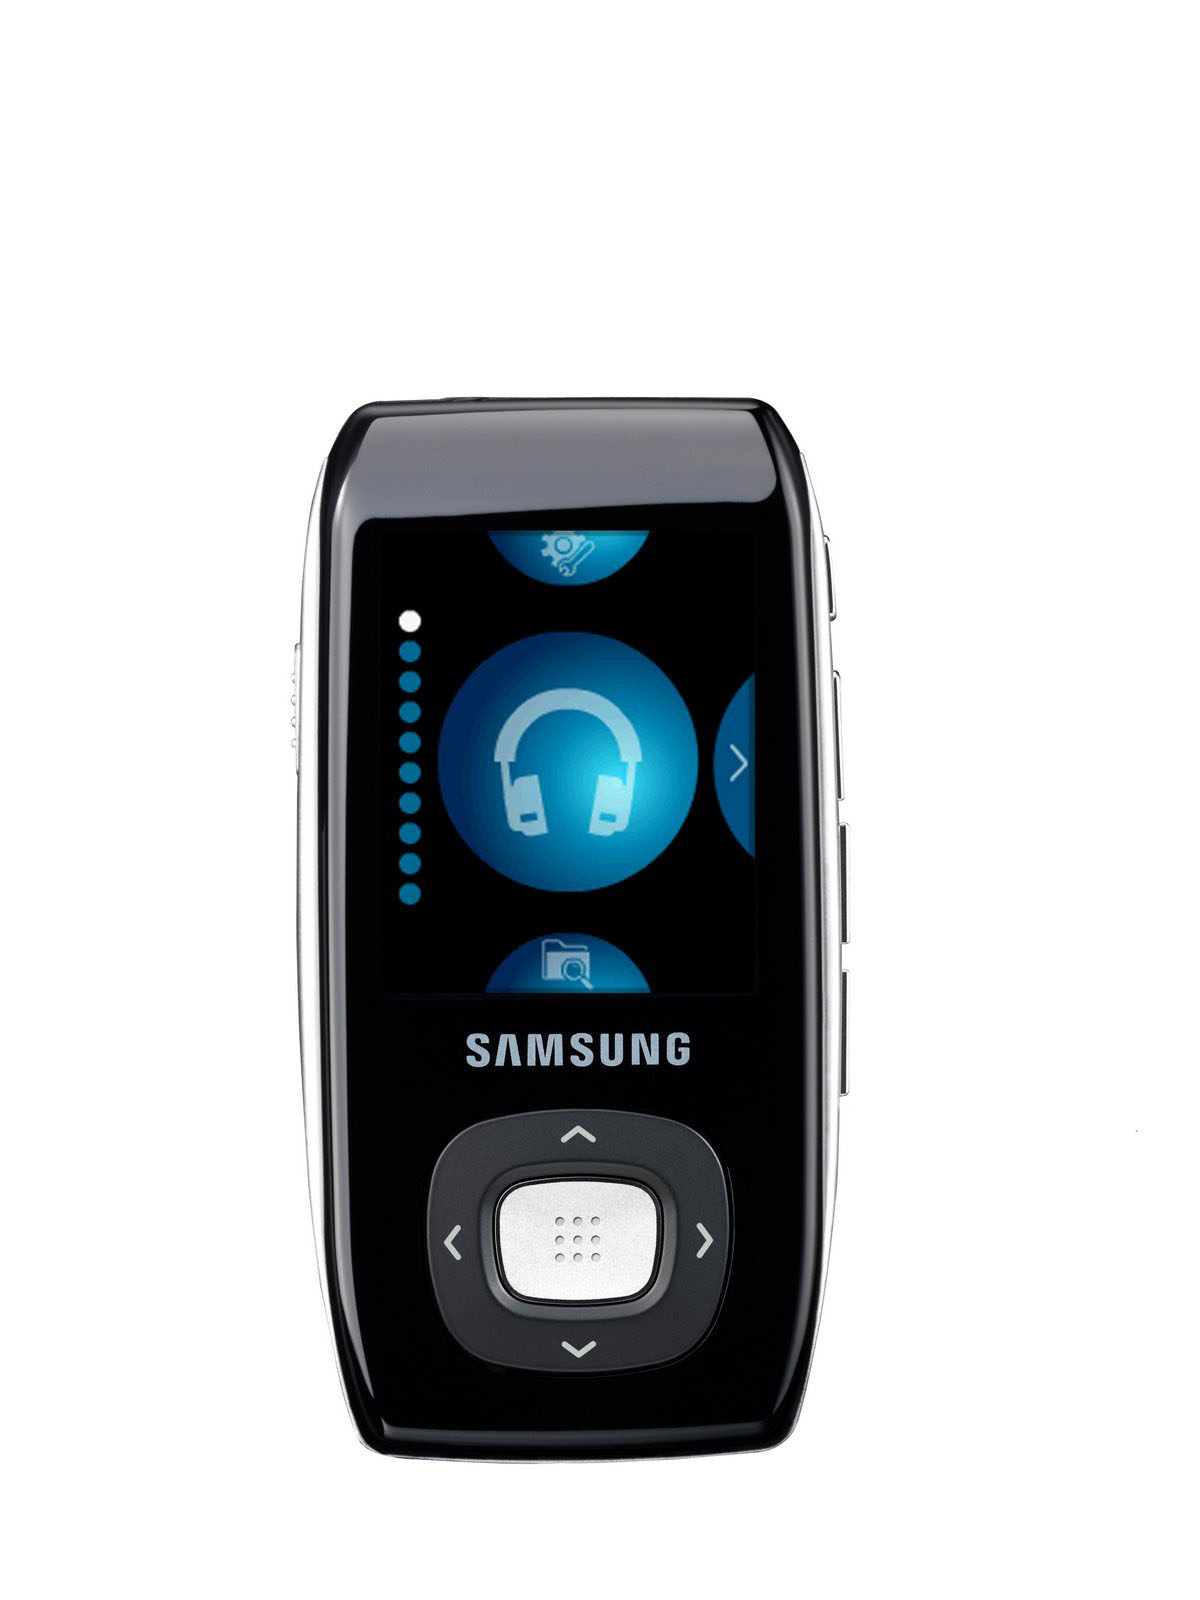 Samsung yp-u3 mp3 player software download